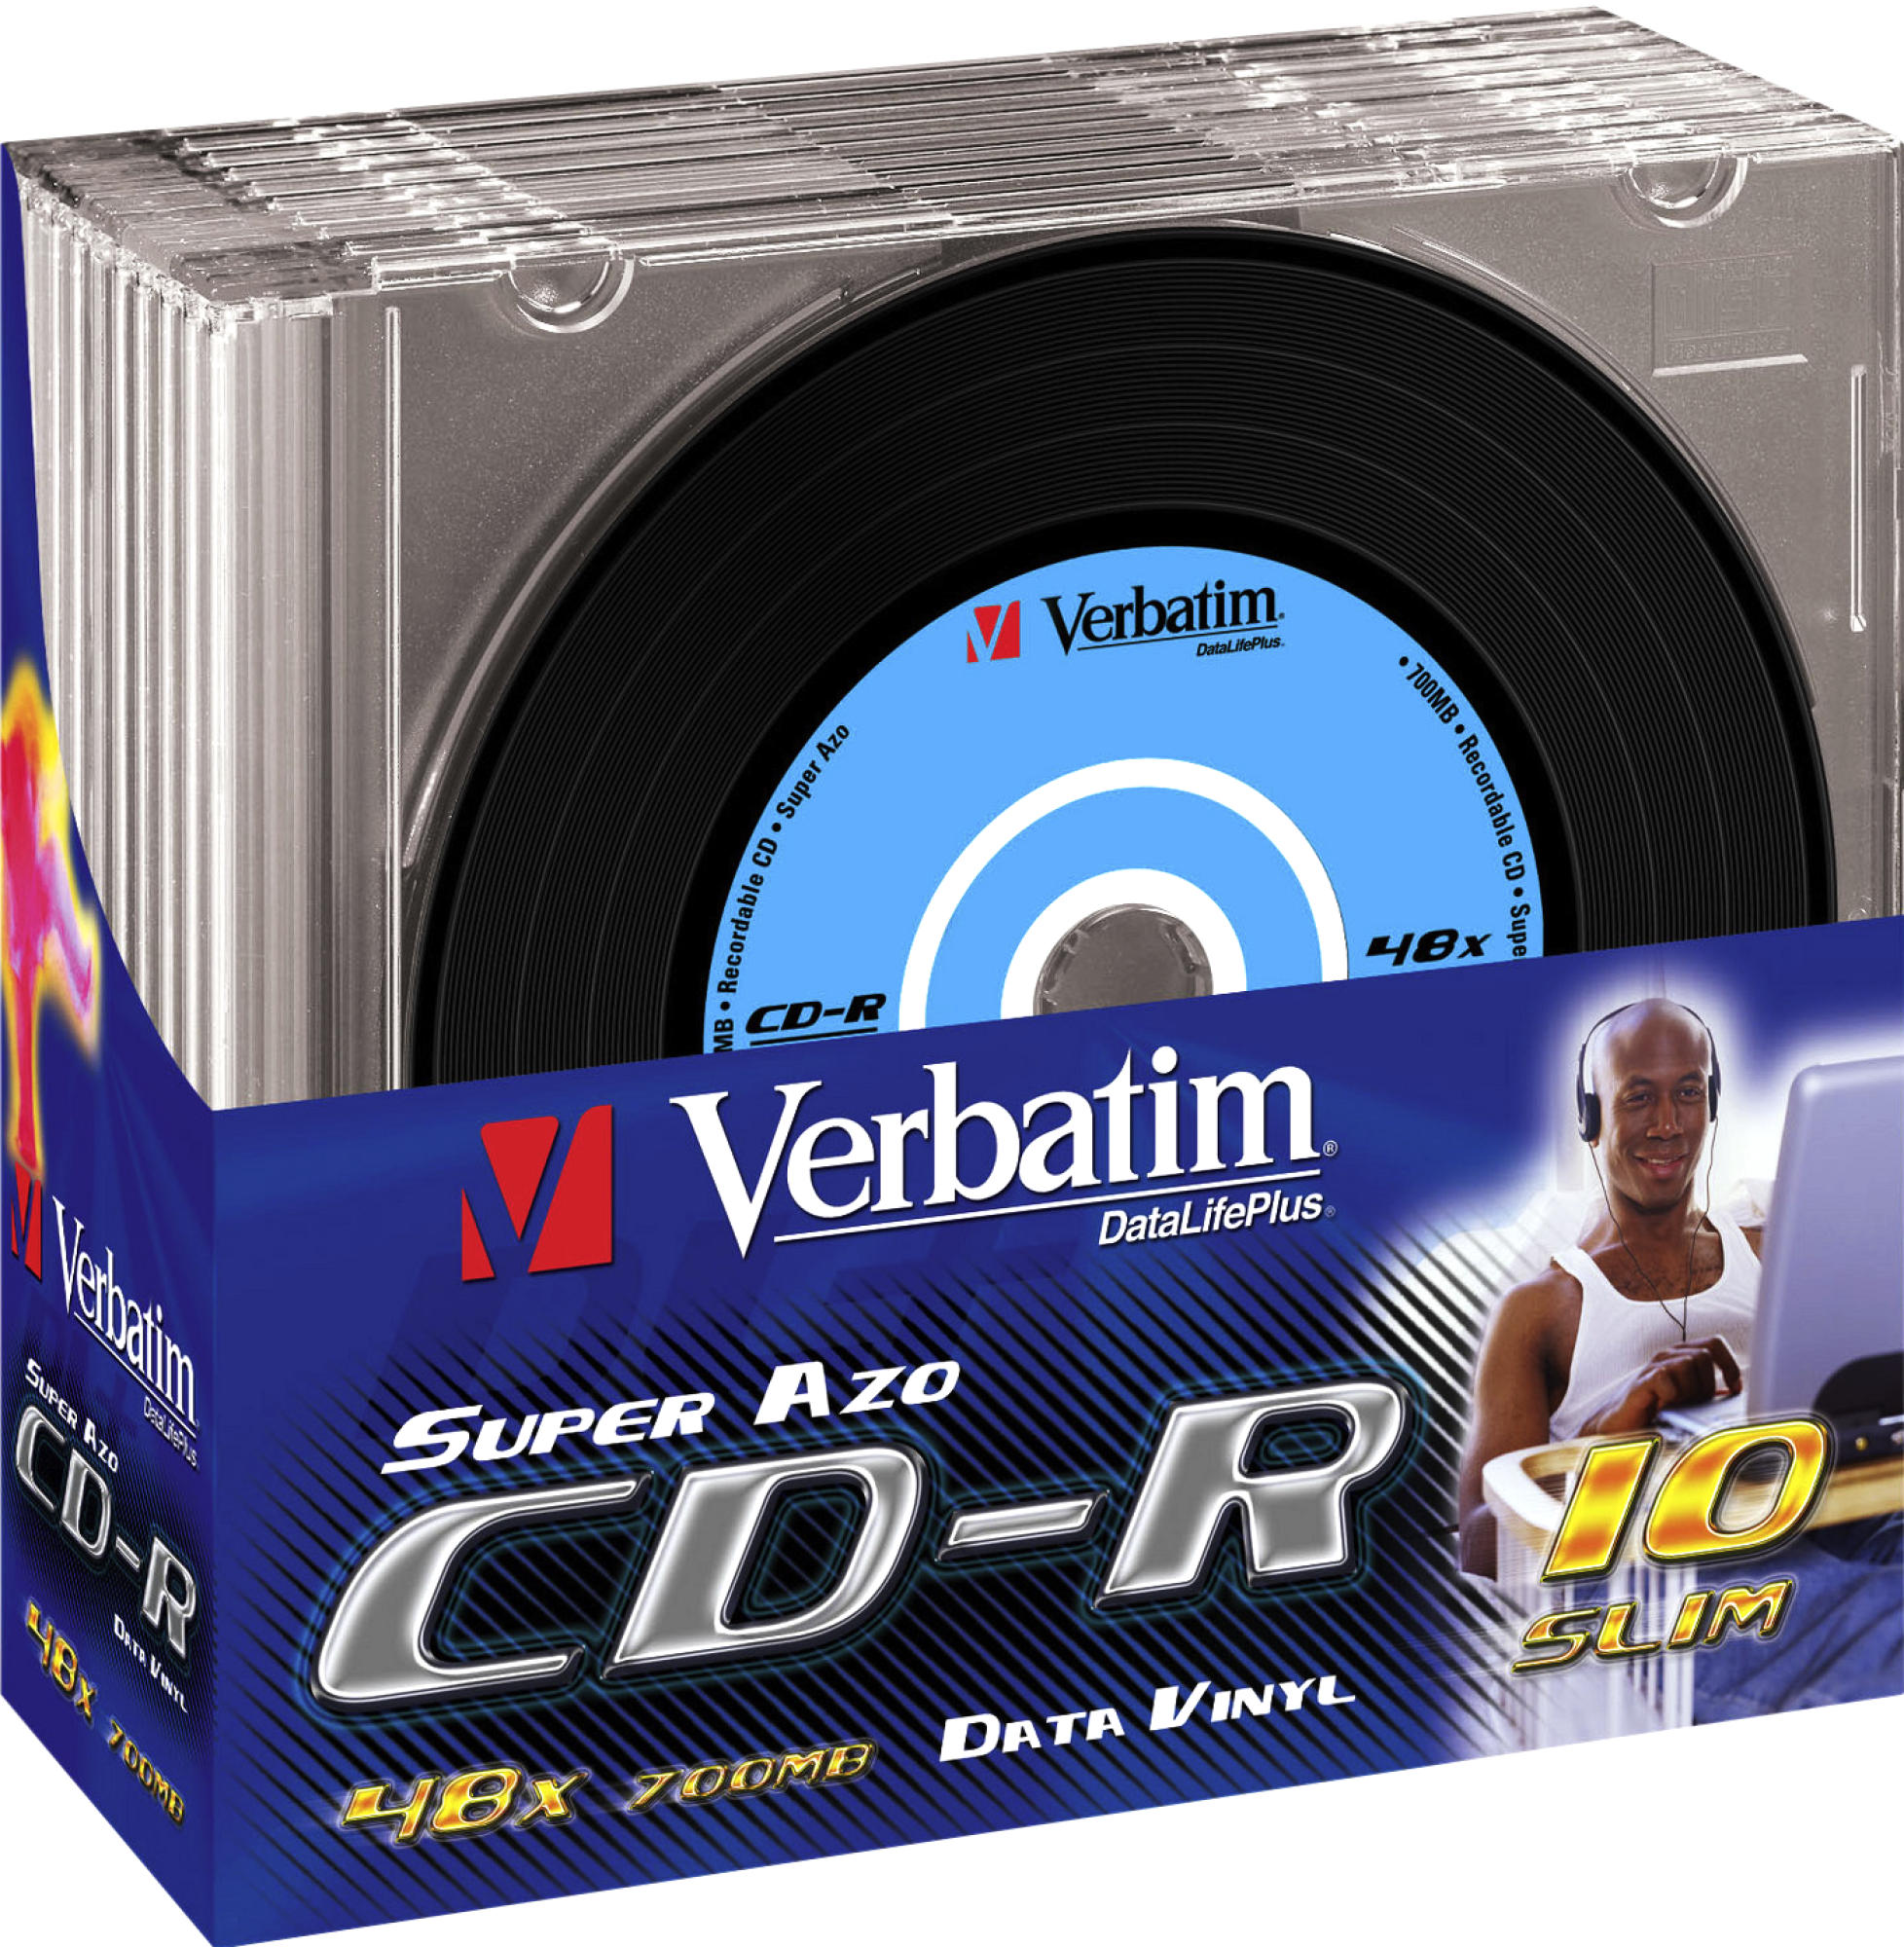 VERBATIM 43426 VINYL SLIM 52X CD-R Rohling 700MB